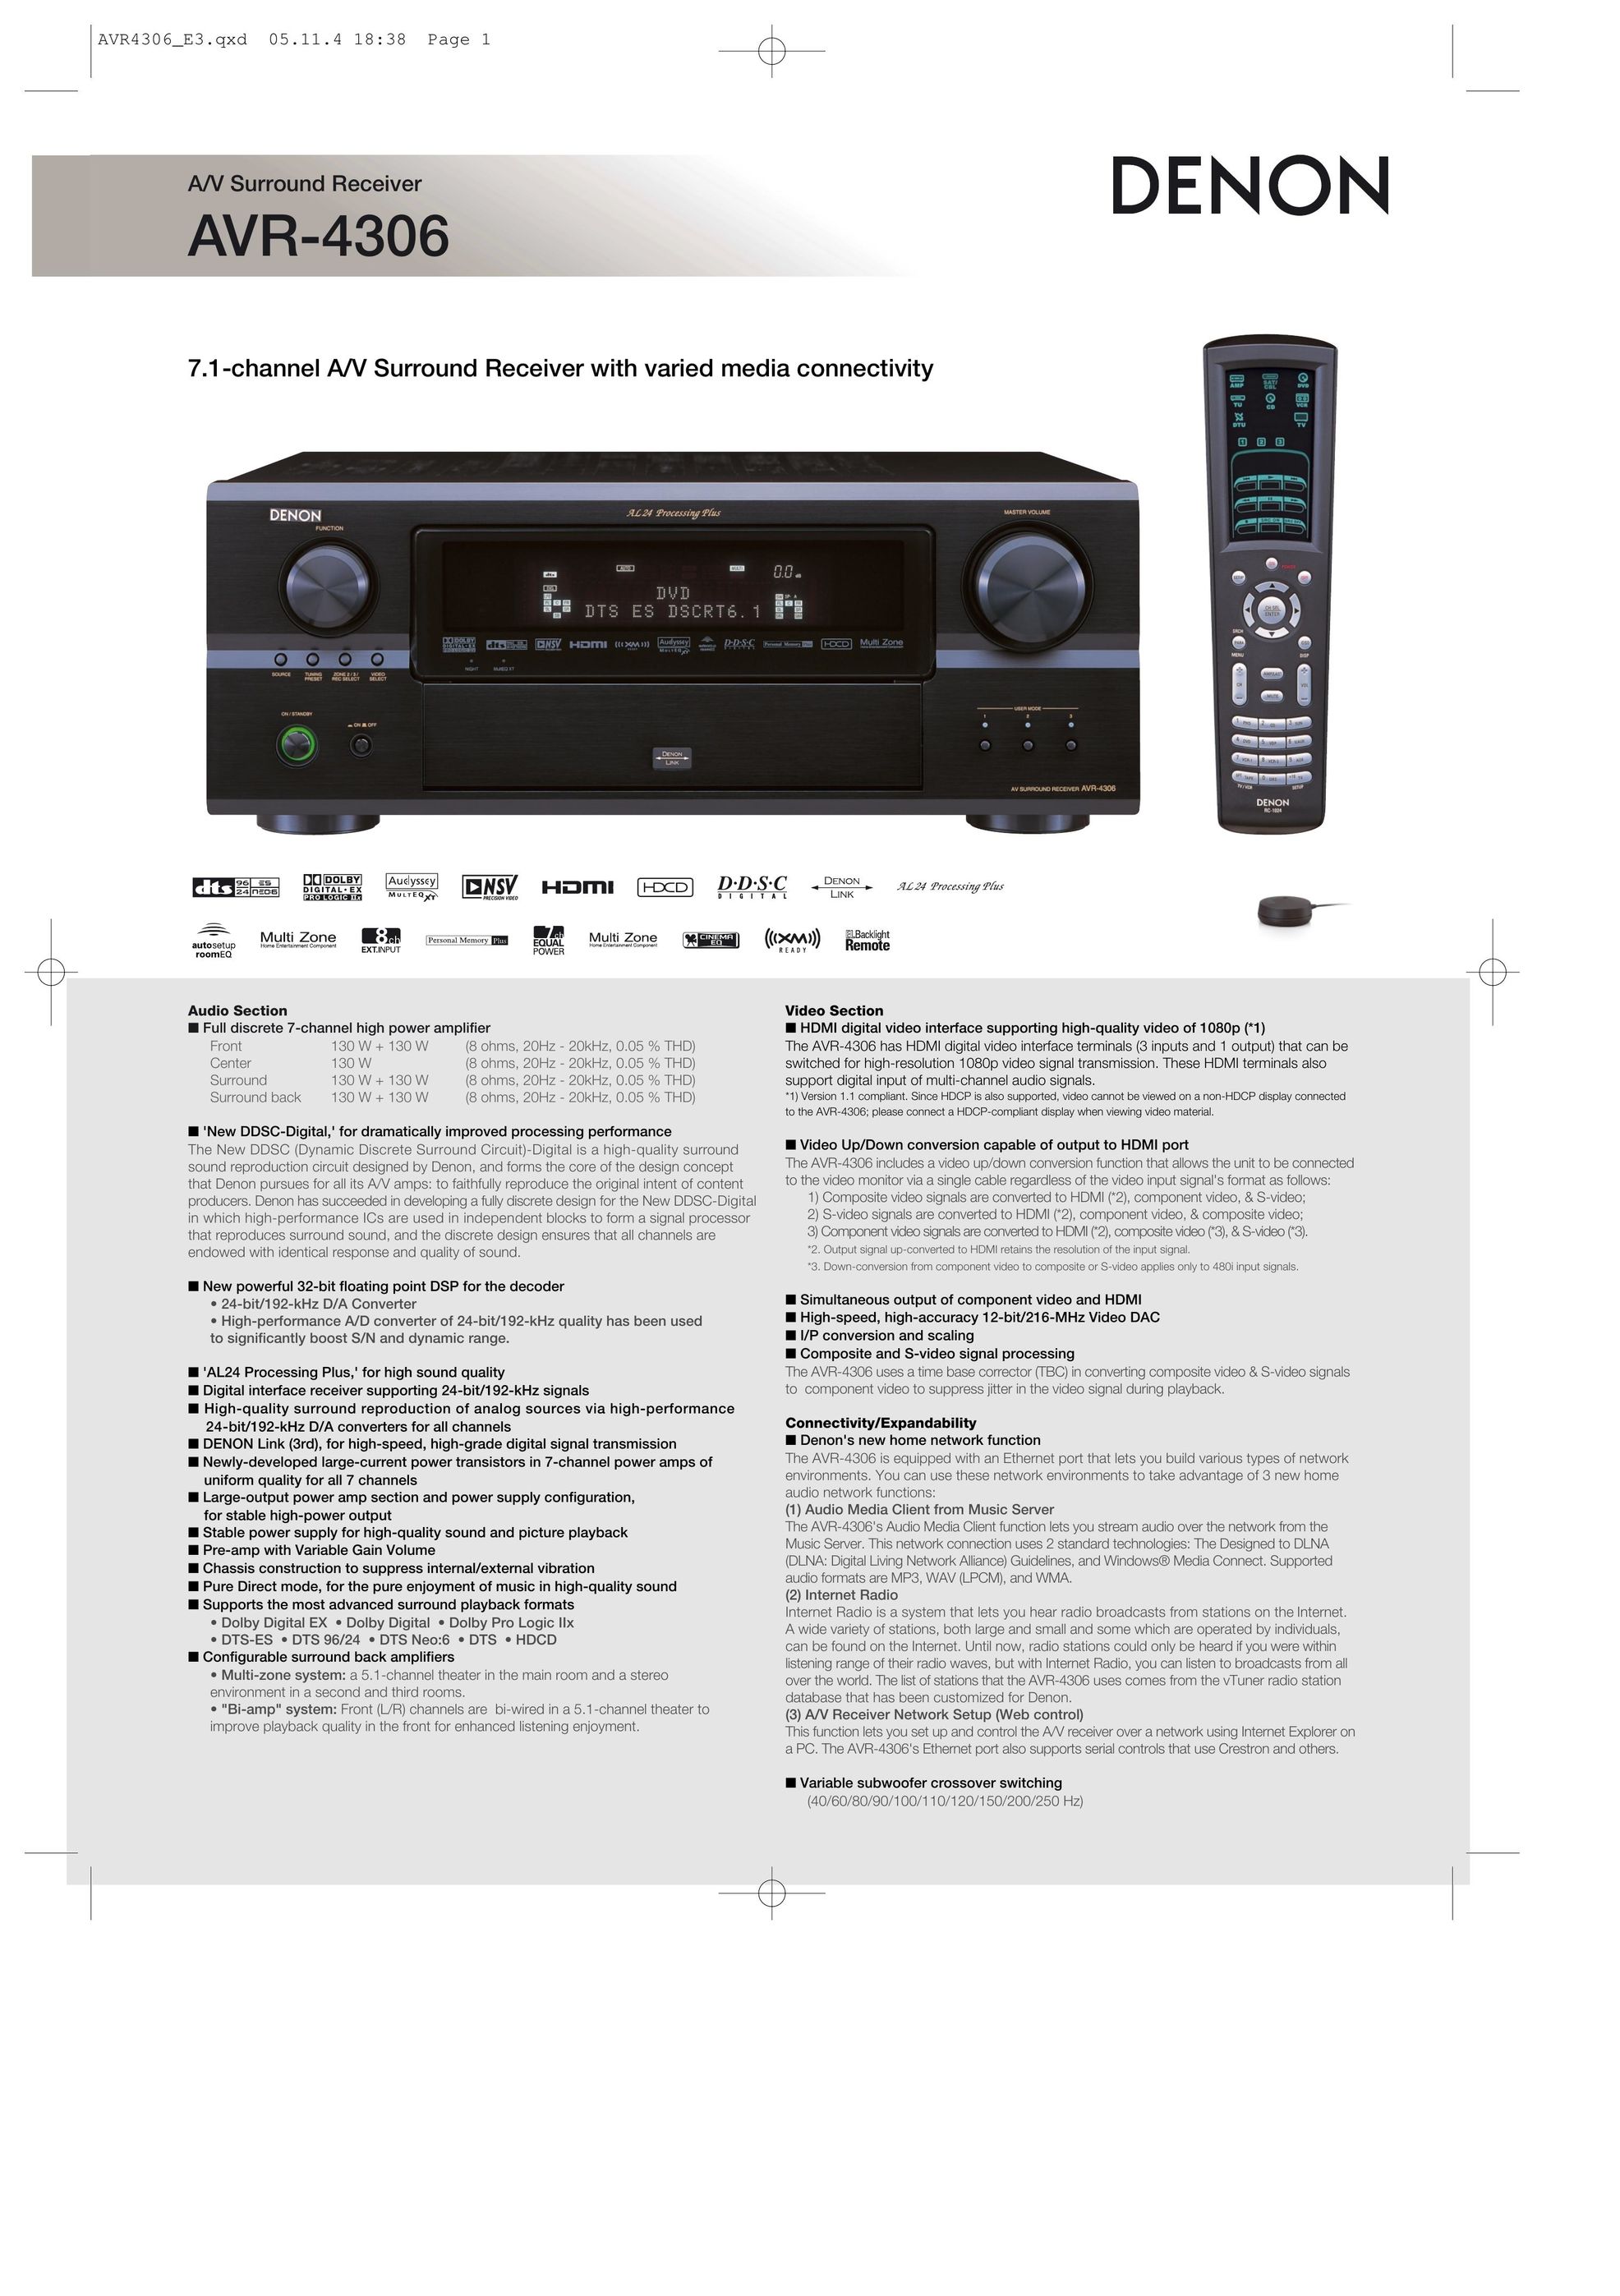 Denon AVR-4306 Stereo System User Manual